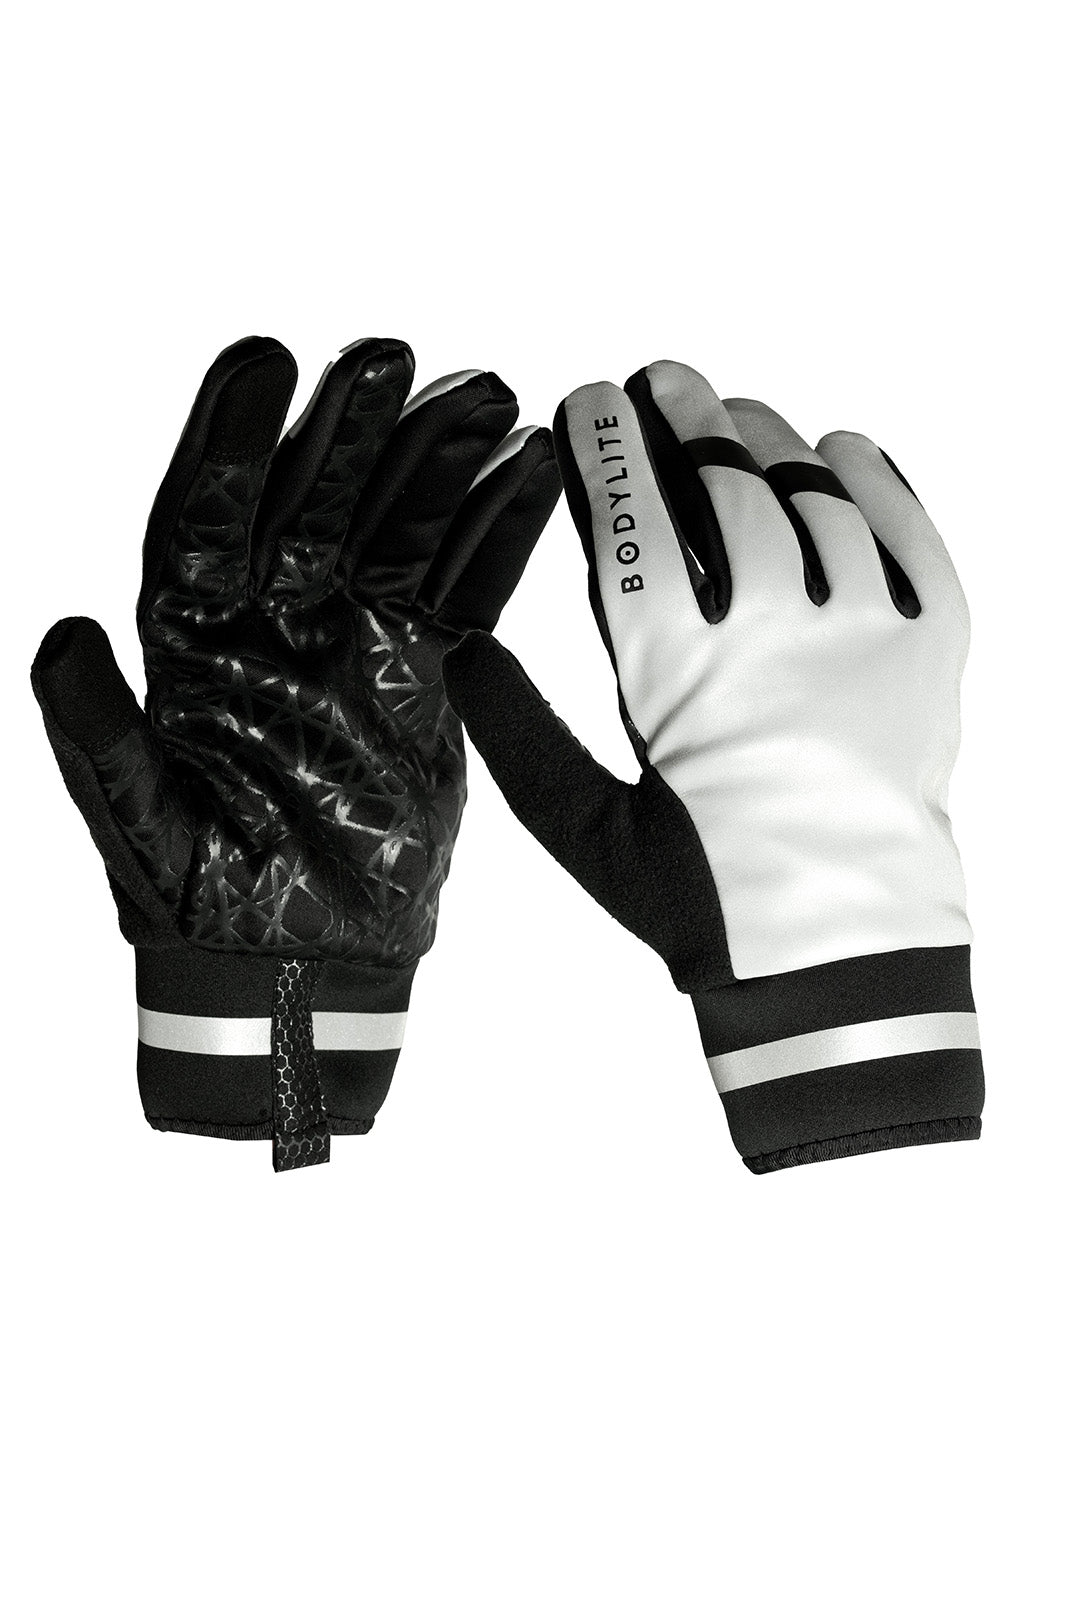 Reflective Winter Gloves